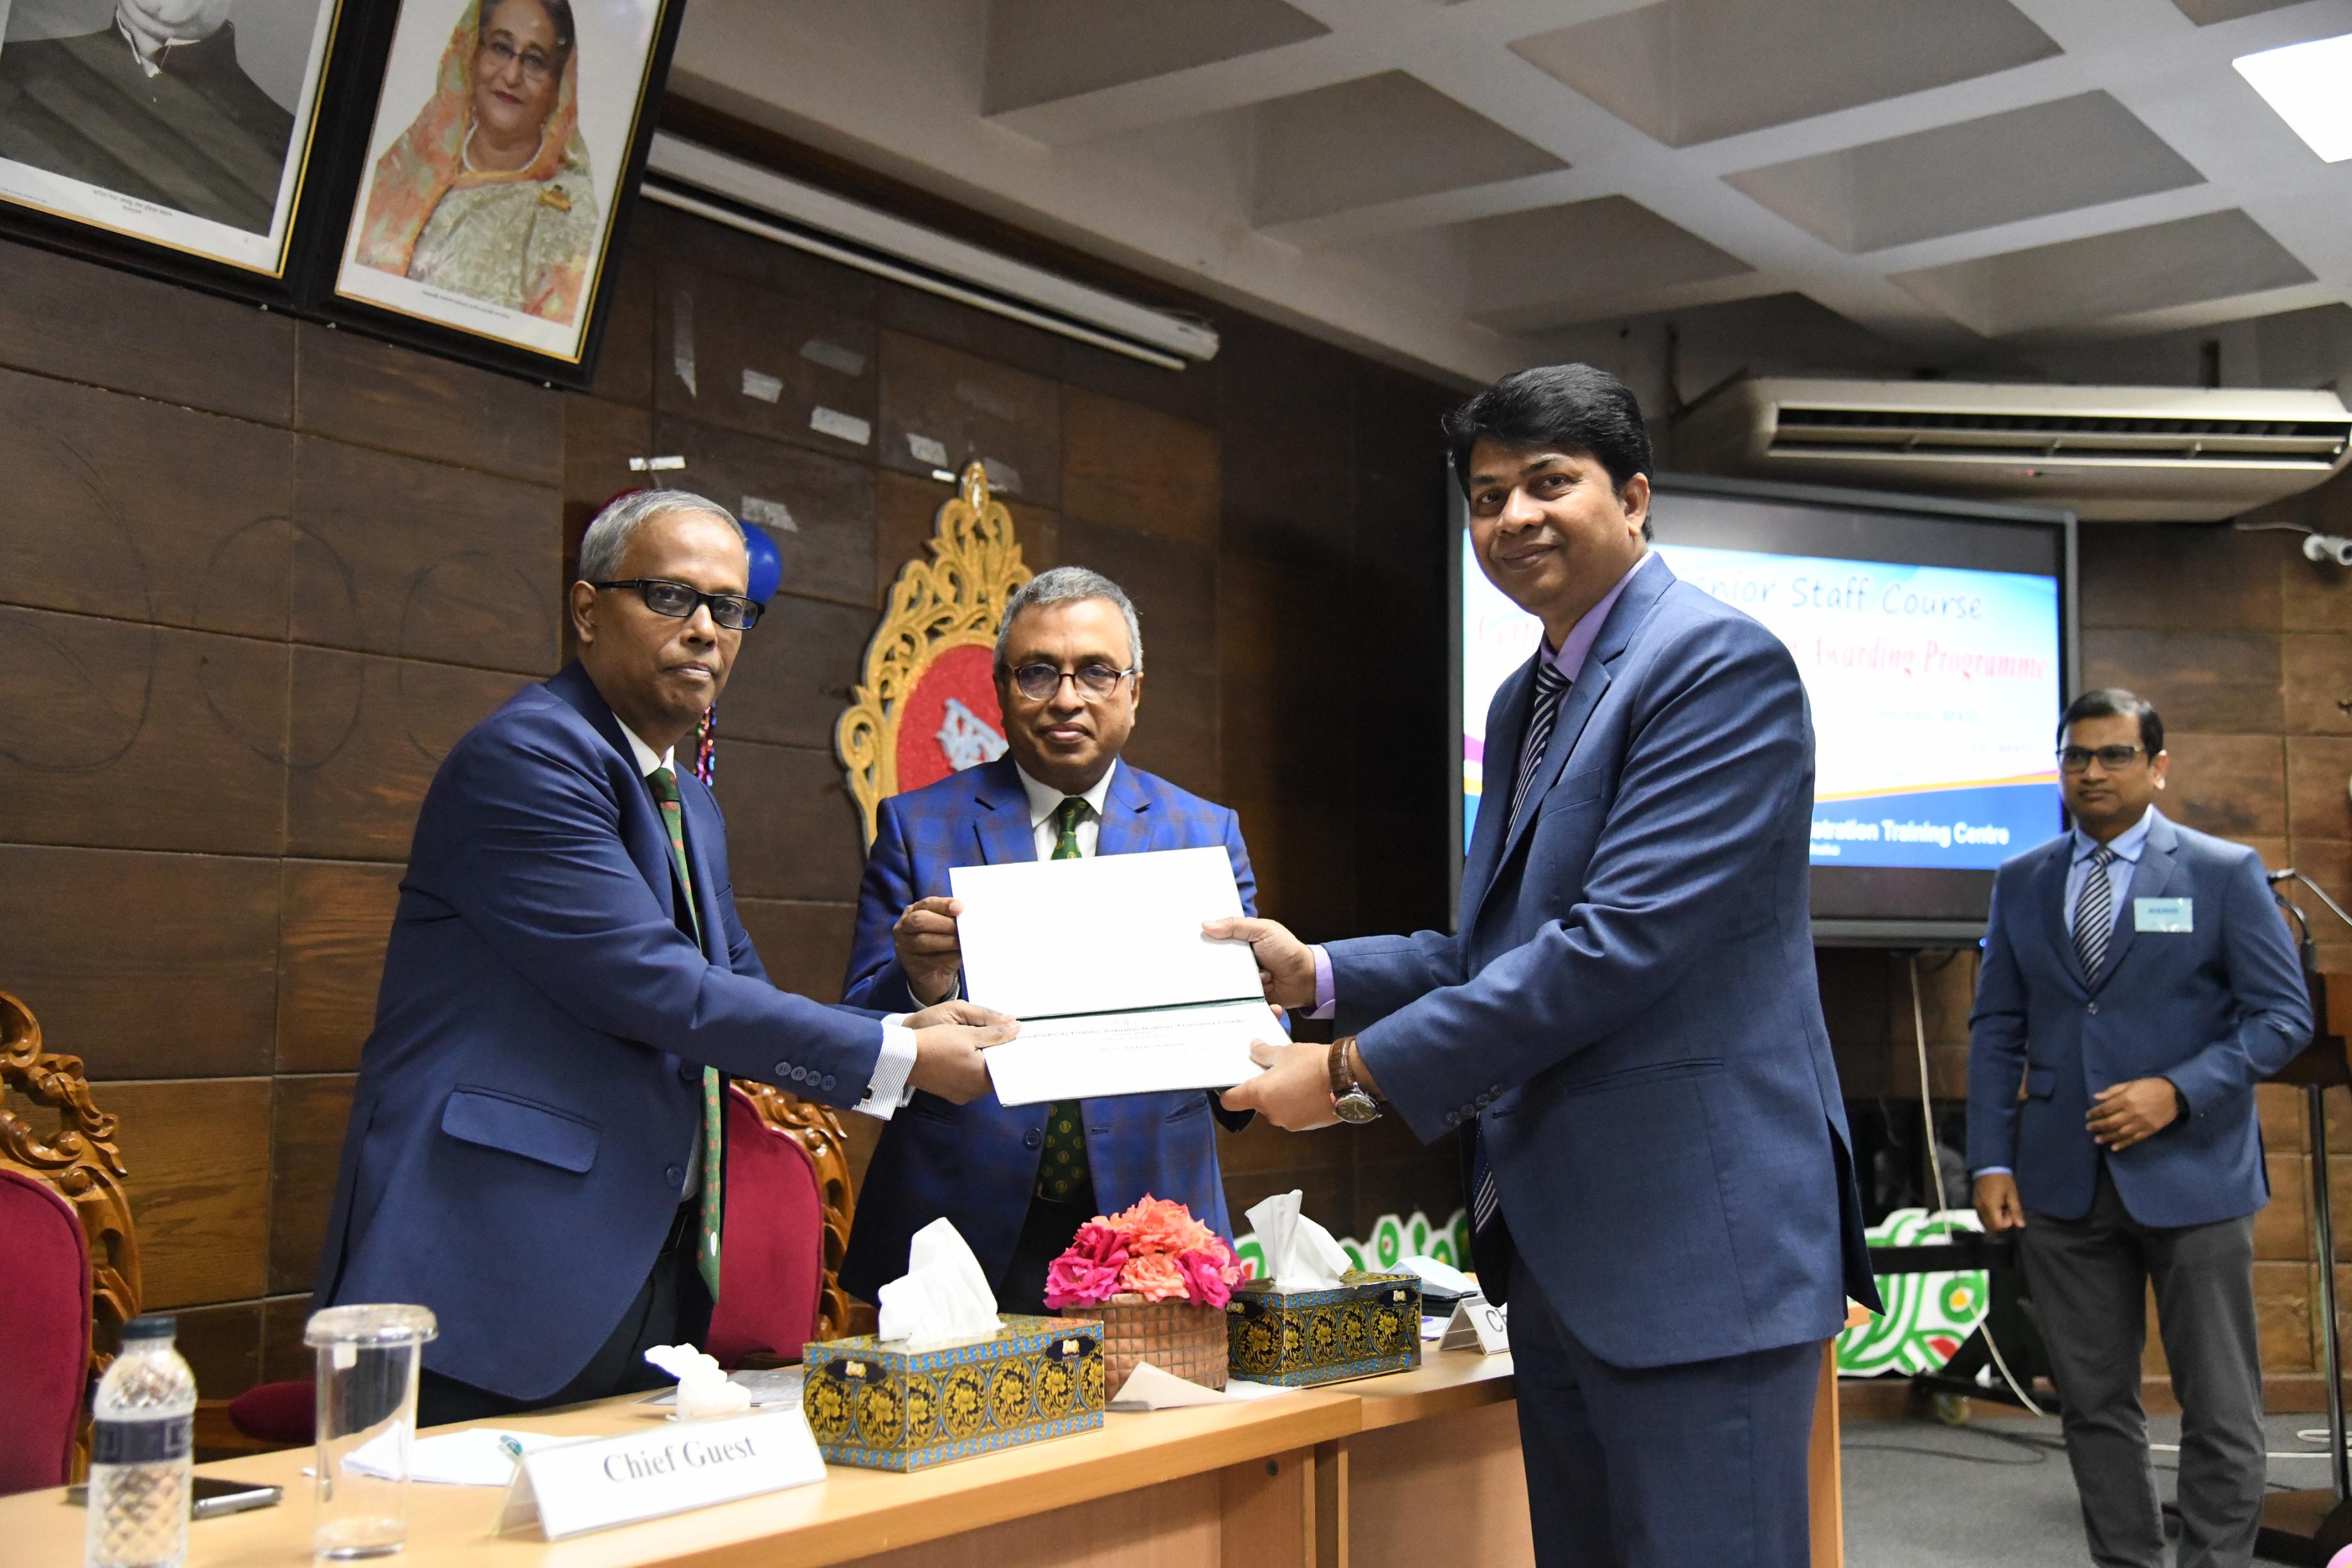 102nd SSC Certificate Award Ceremony